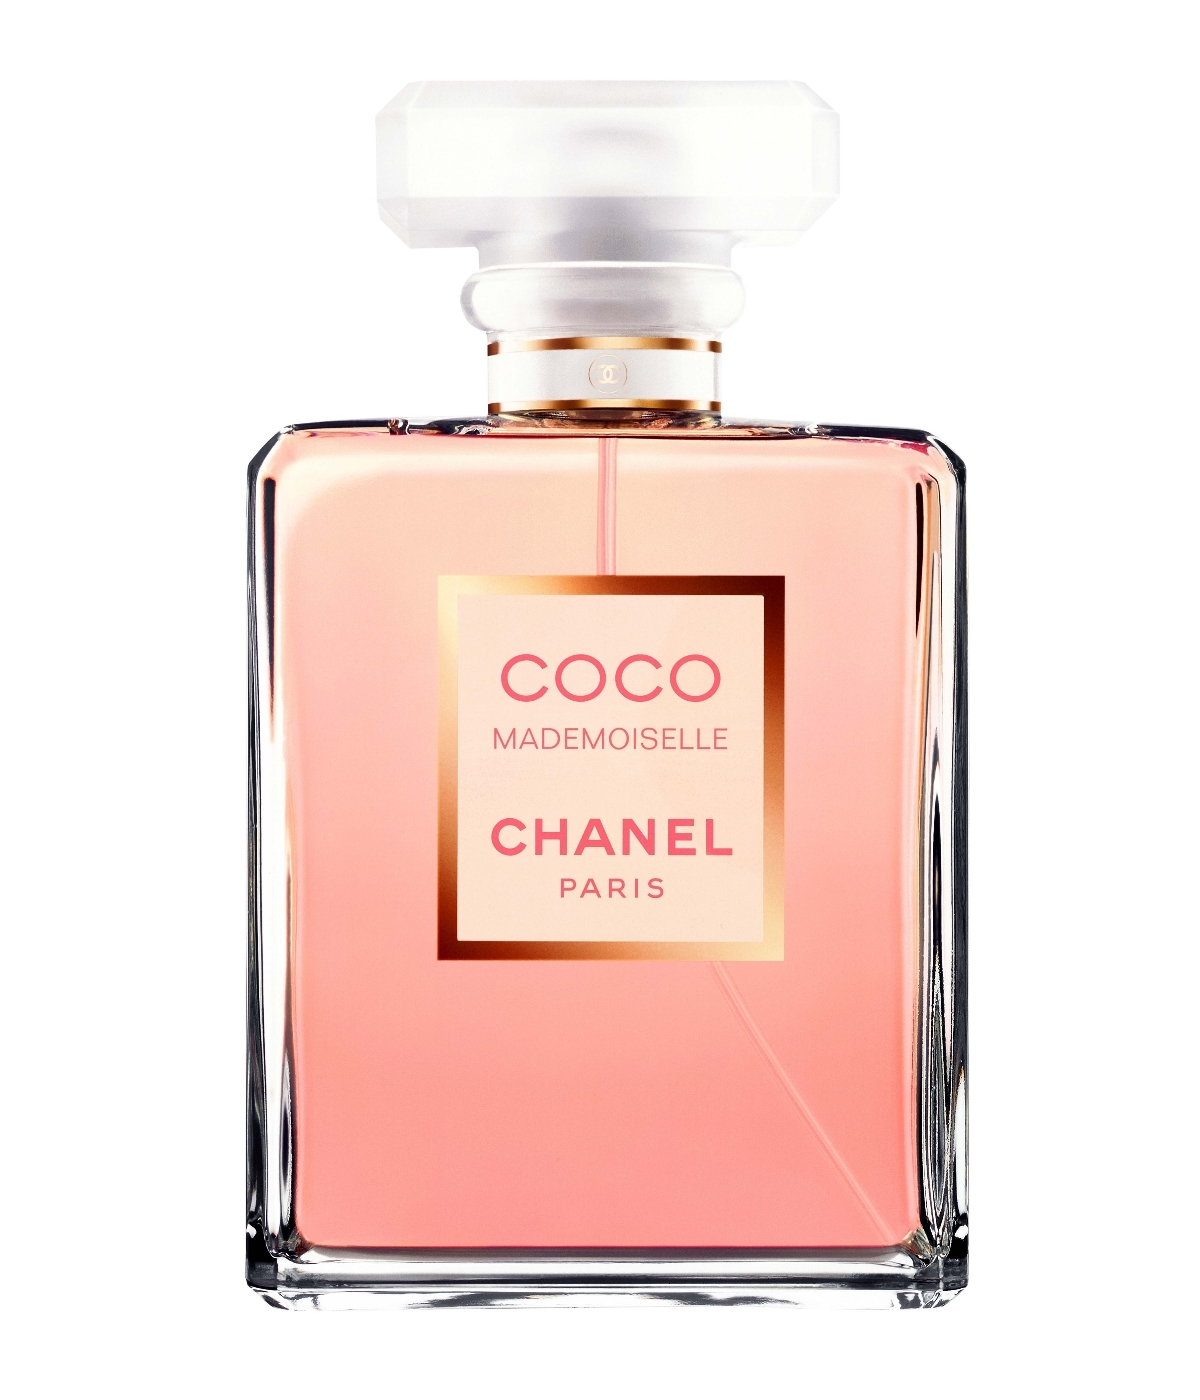 Coco Mademoiselle de Chanel.